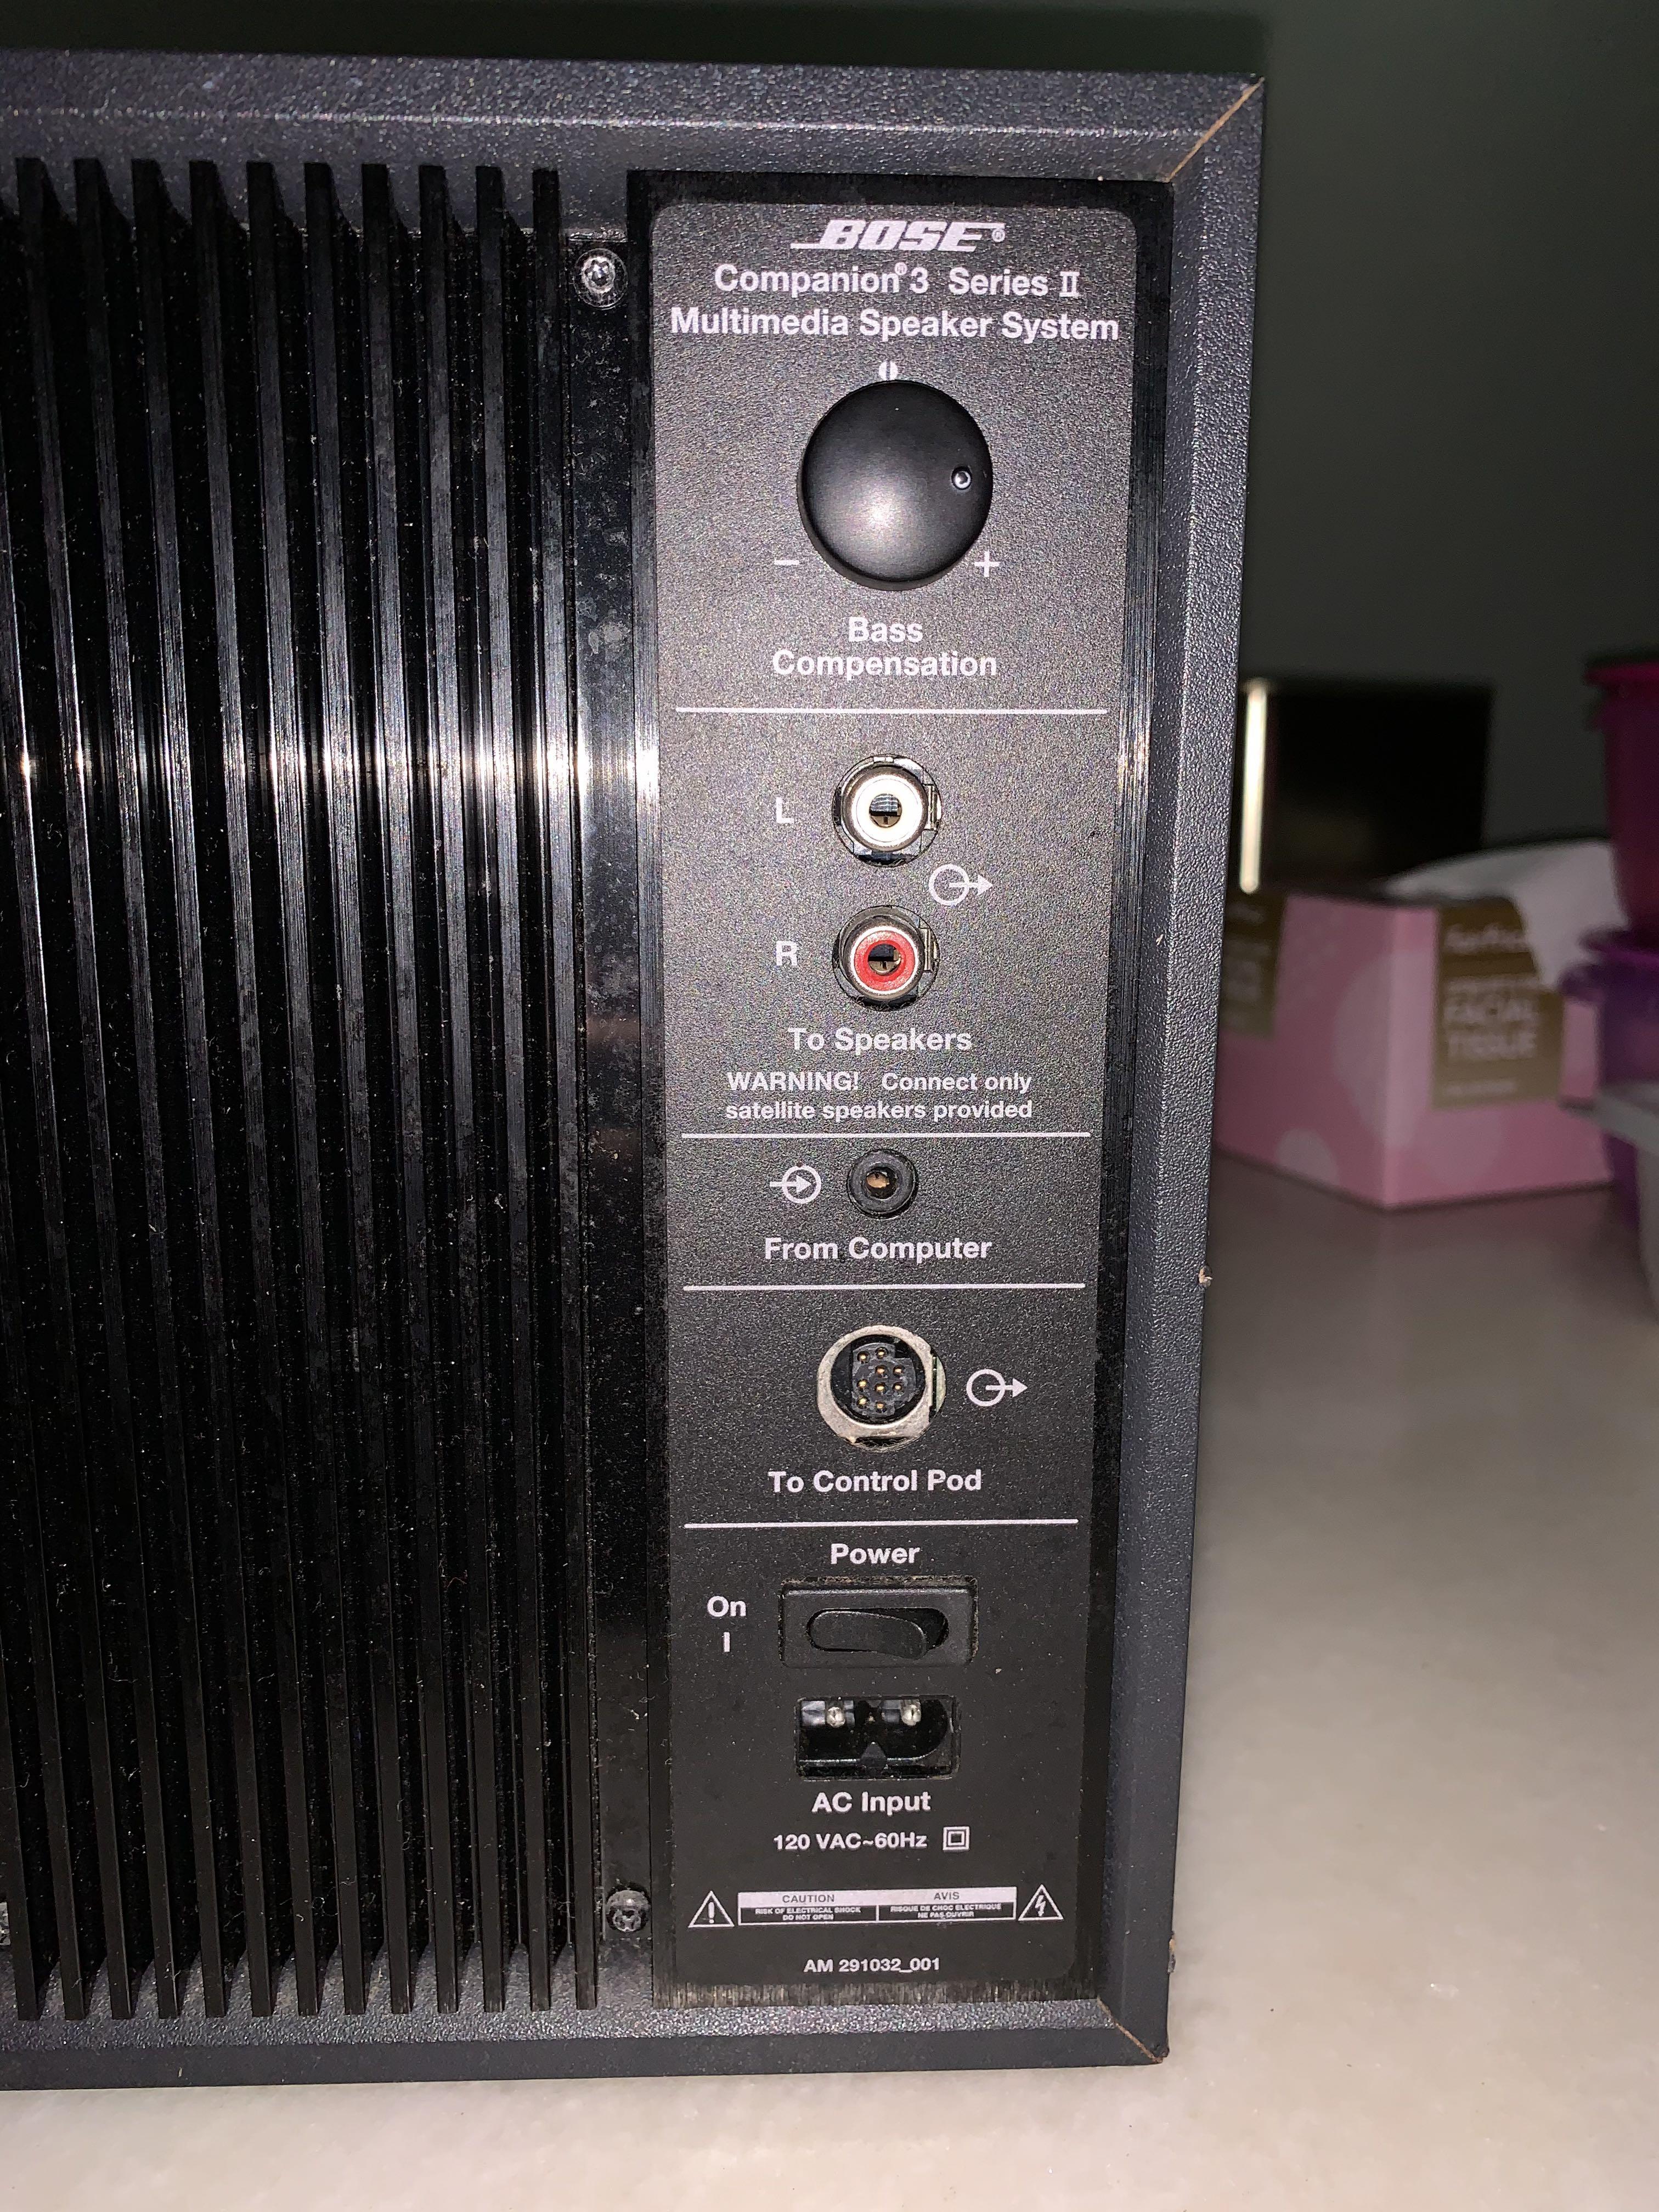 Bose Companion 3 Series II Multimedia Speaker System Tested